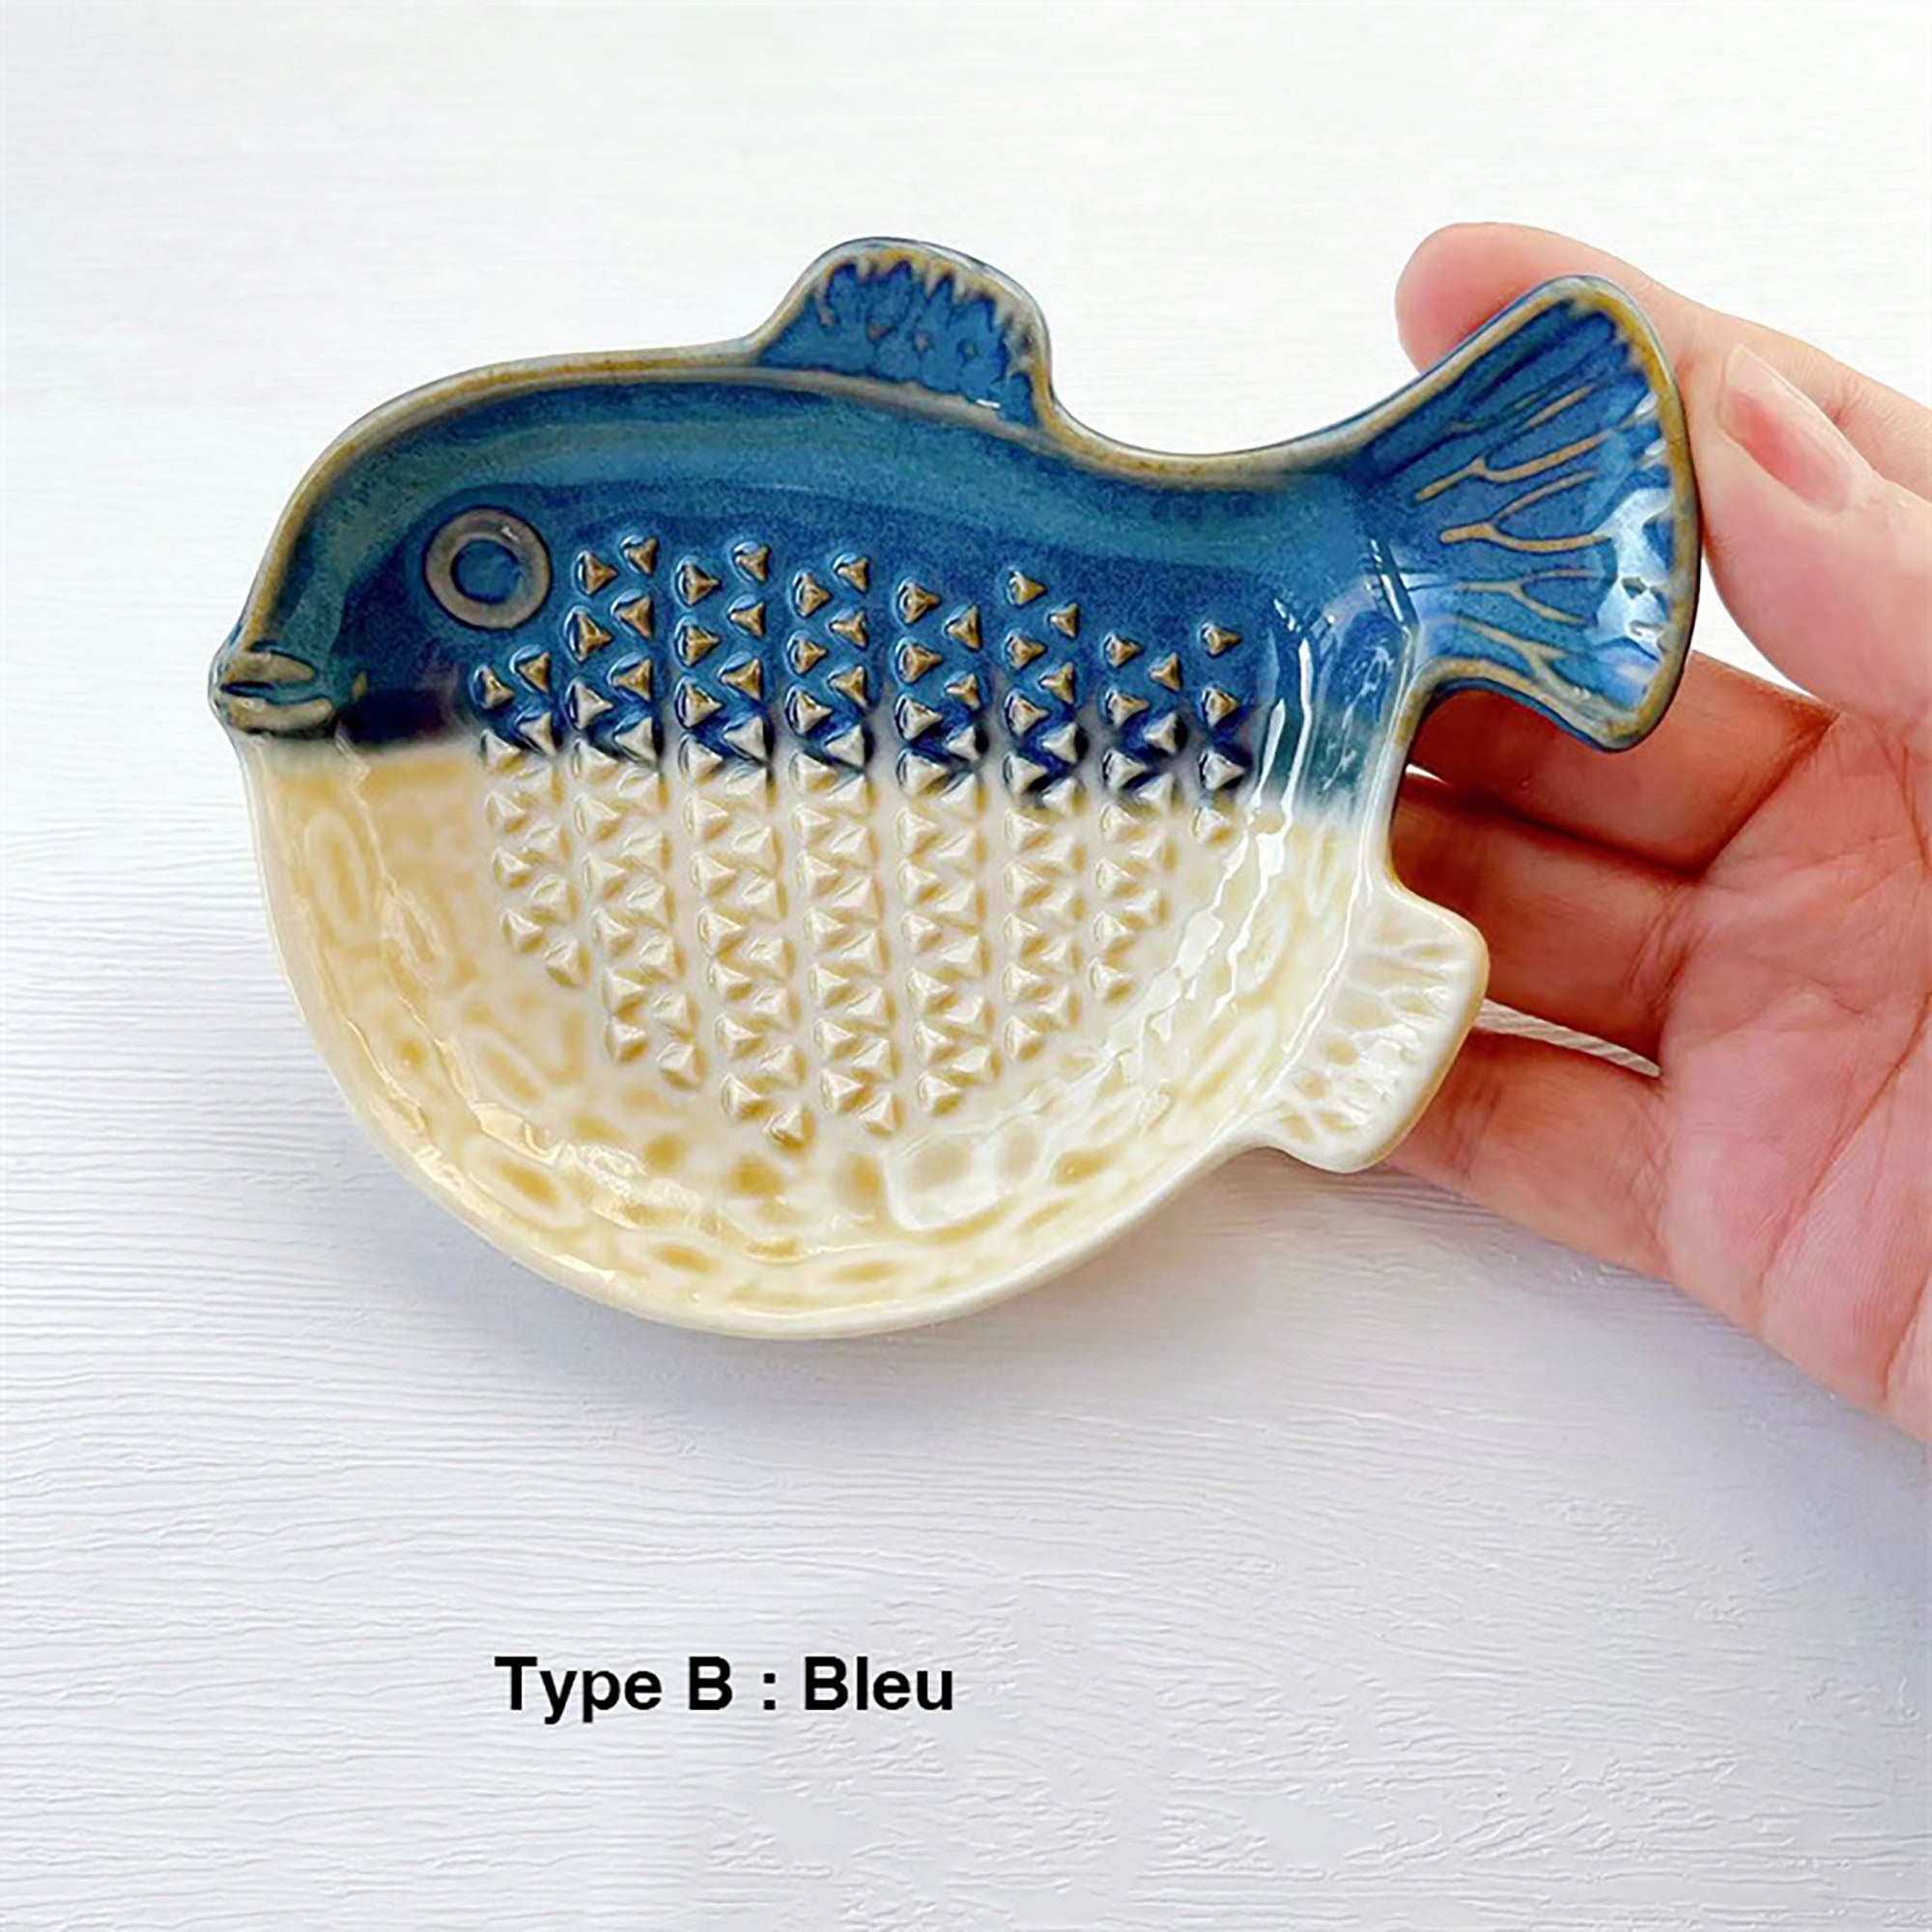 Fish-shaped mortar plate